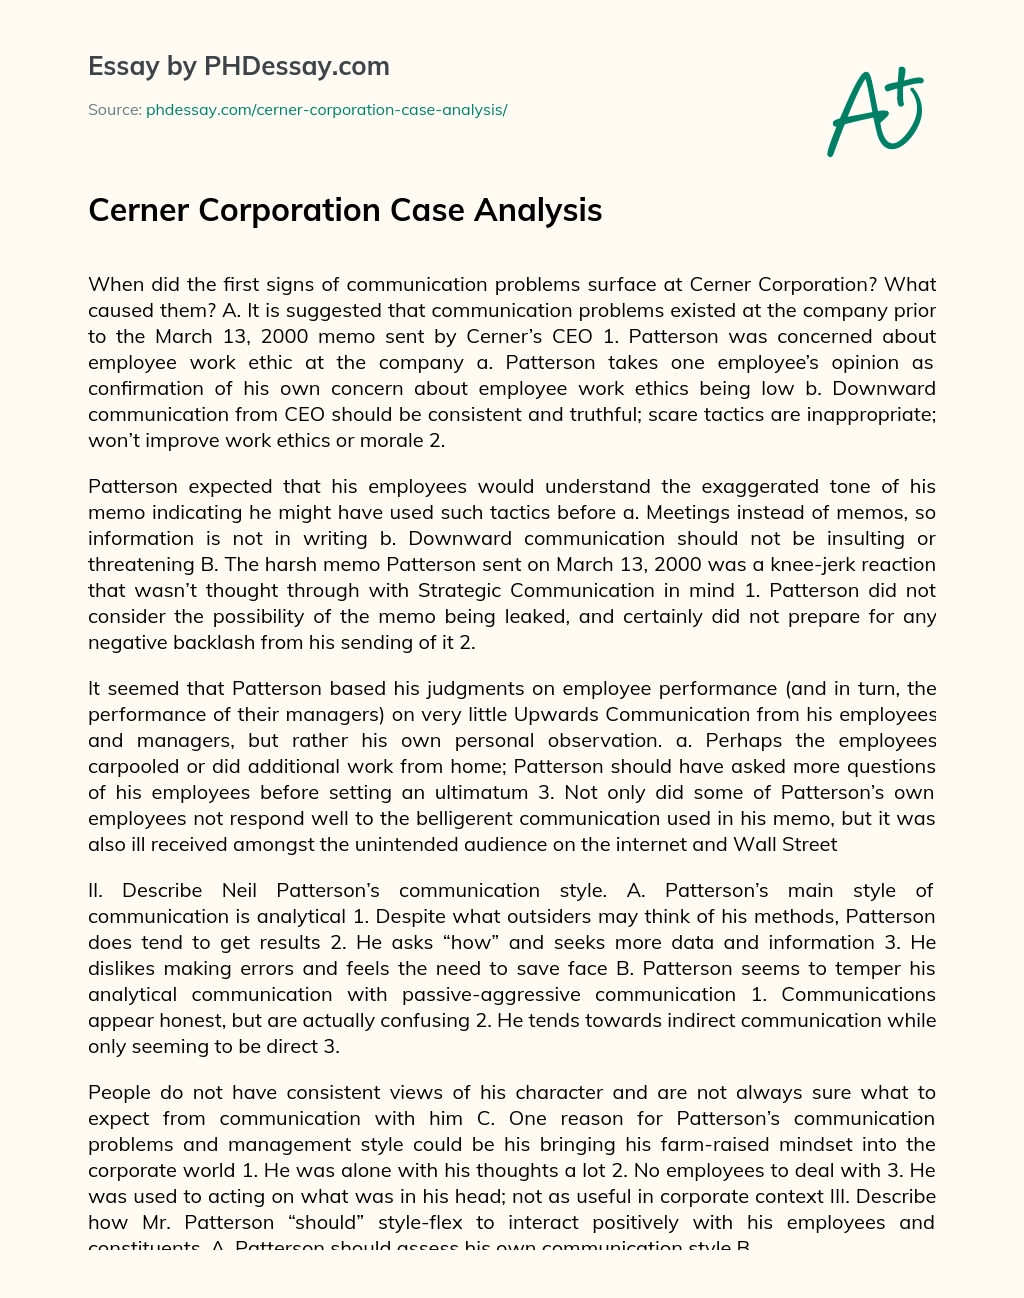 Cerner Corporation Case Analysis essay